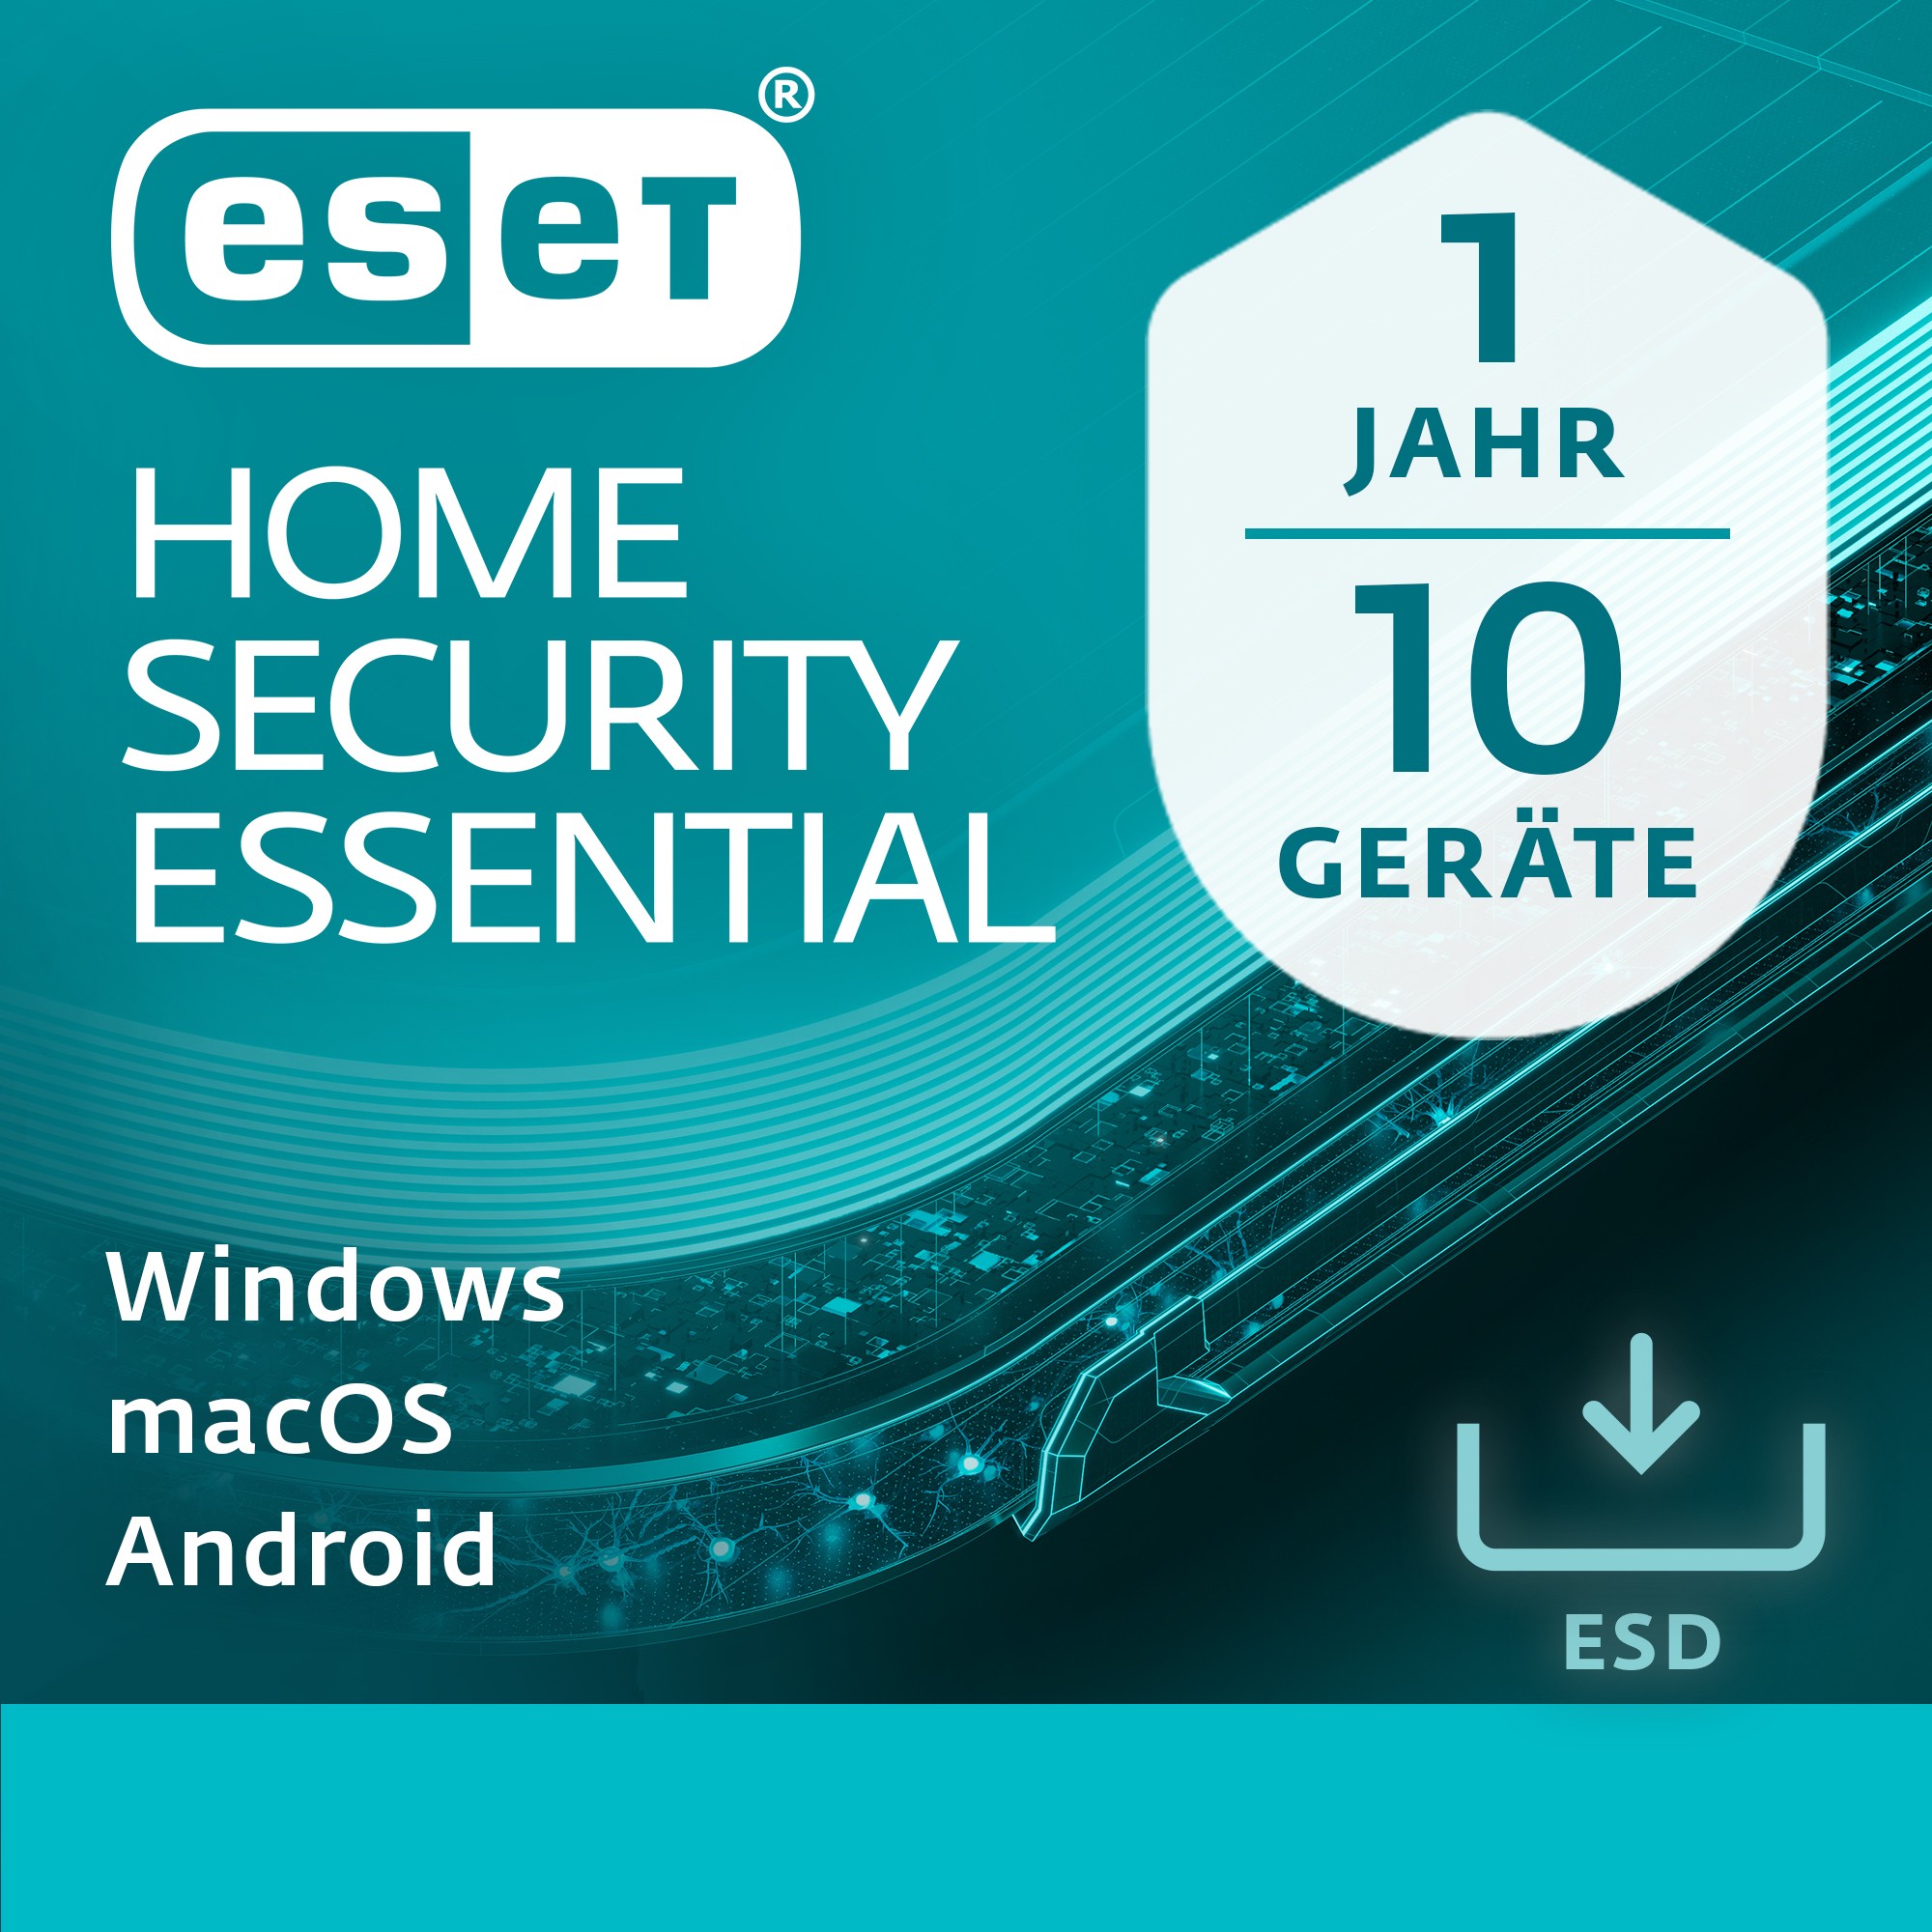 ESET EHSE-N1A10-VAKT-E, ESD-Lizenzen, ESET Home Security  (BILD1)